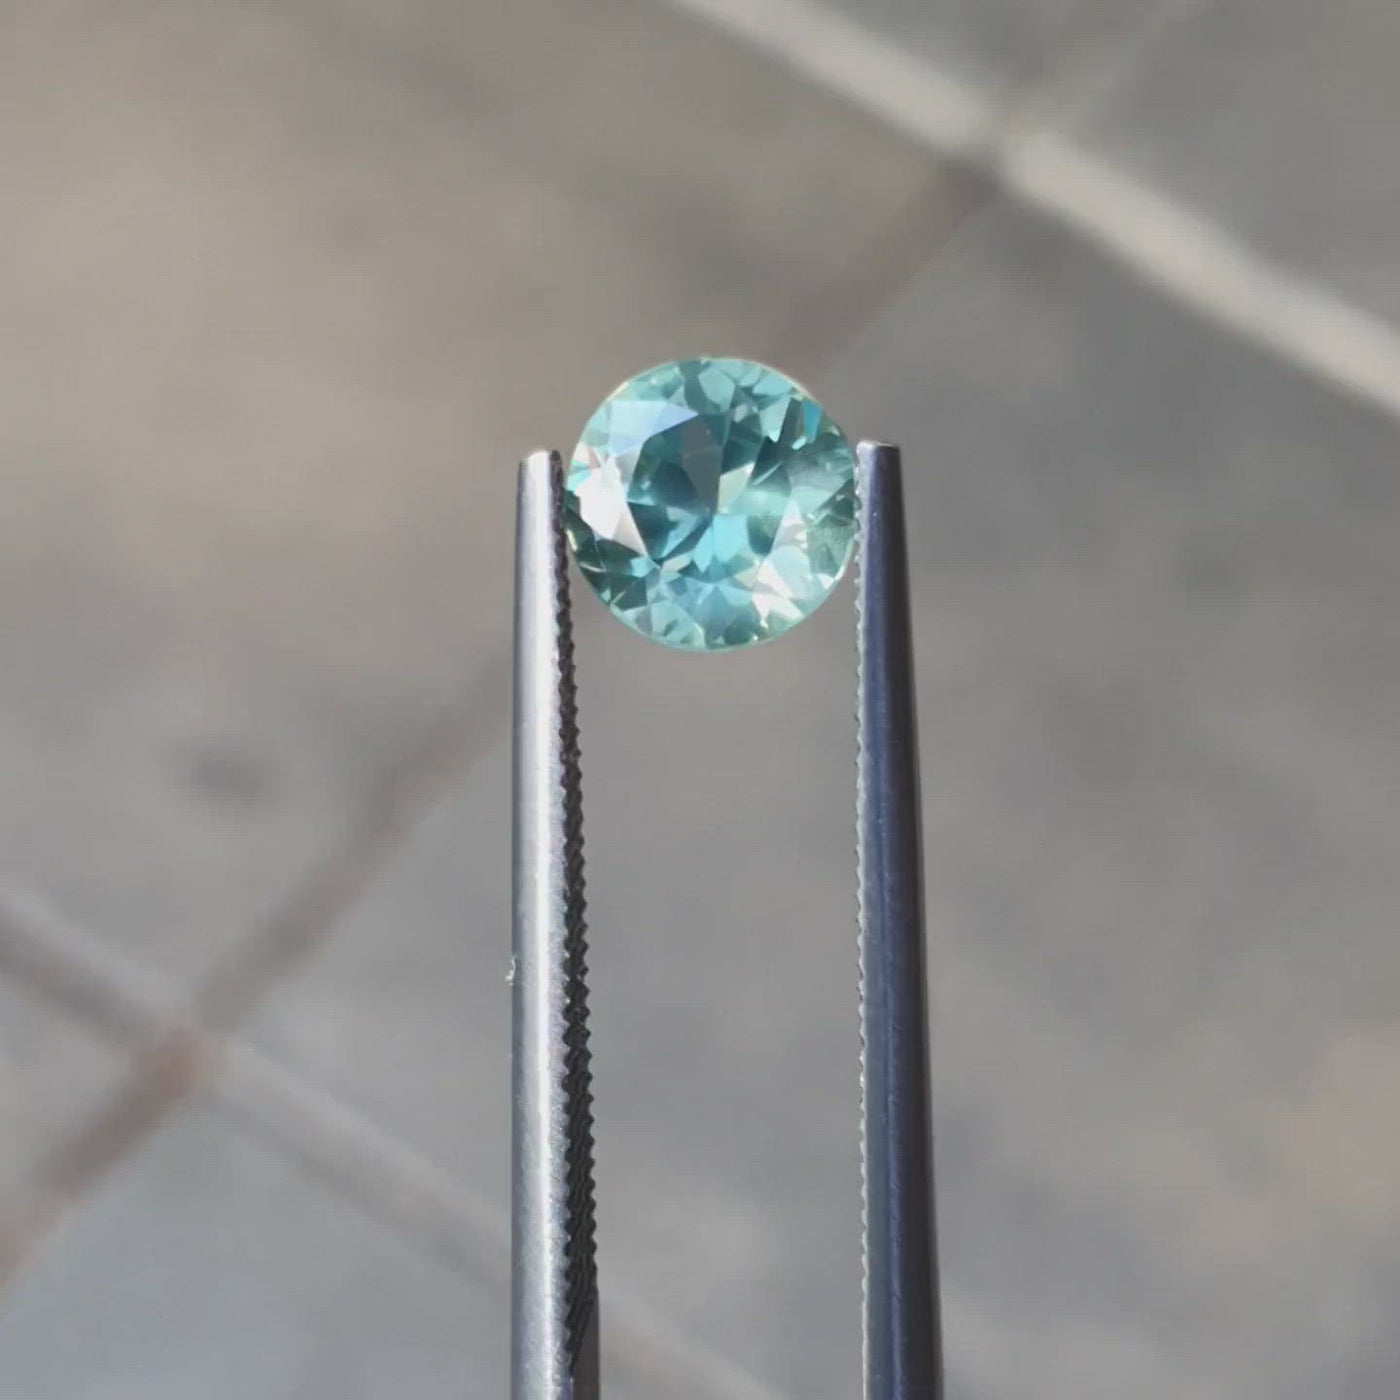 1.76ct Australian Sapphire, Teal, Green, Blue - Round